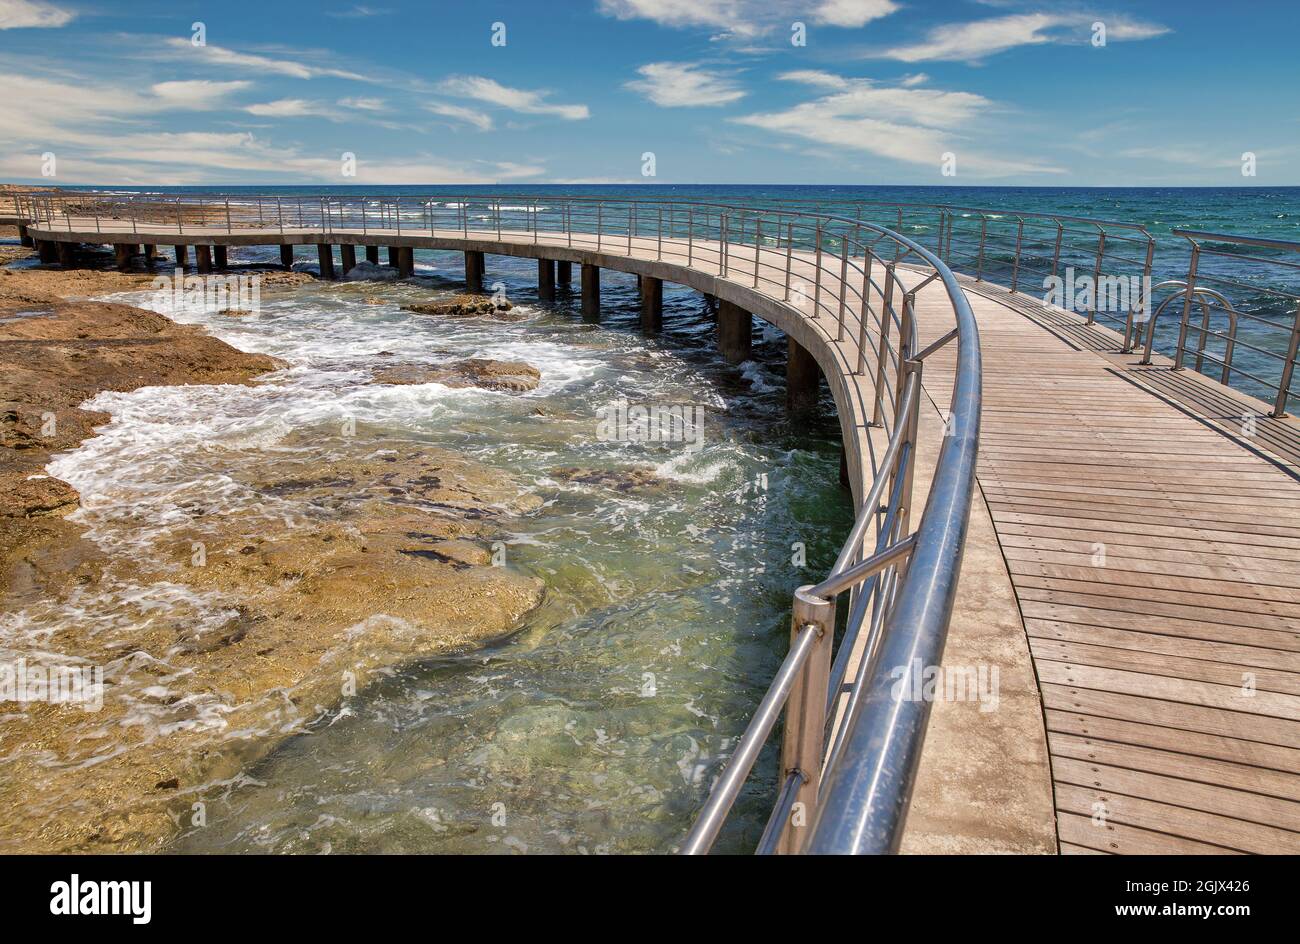 Ayia Napa summer resort beach promenade seafront, Cyprus. Stock Photo